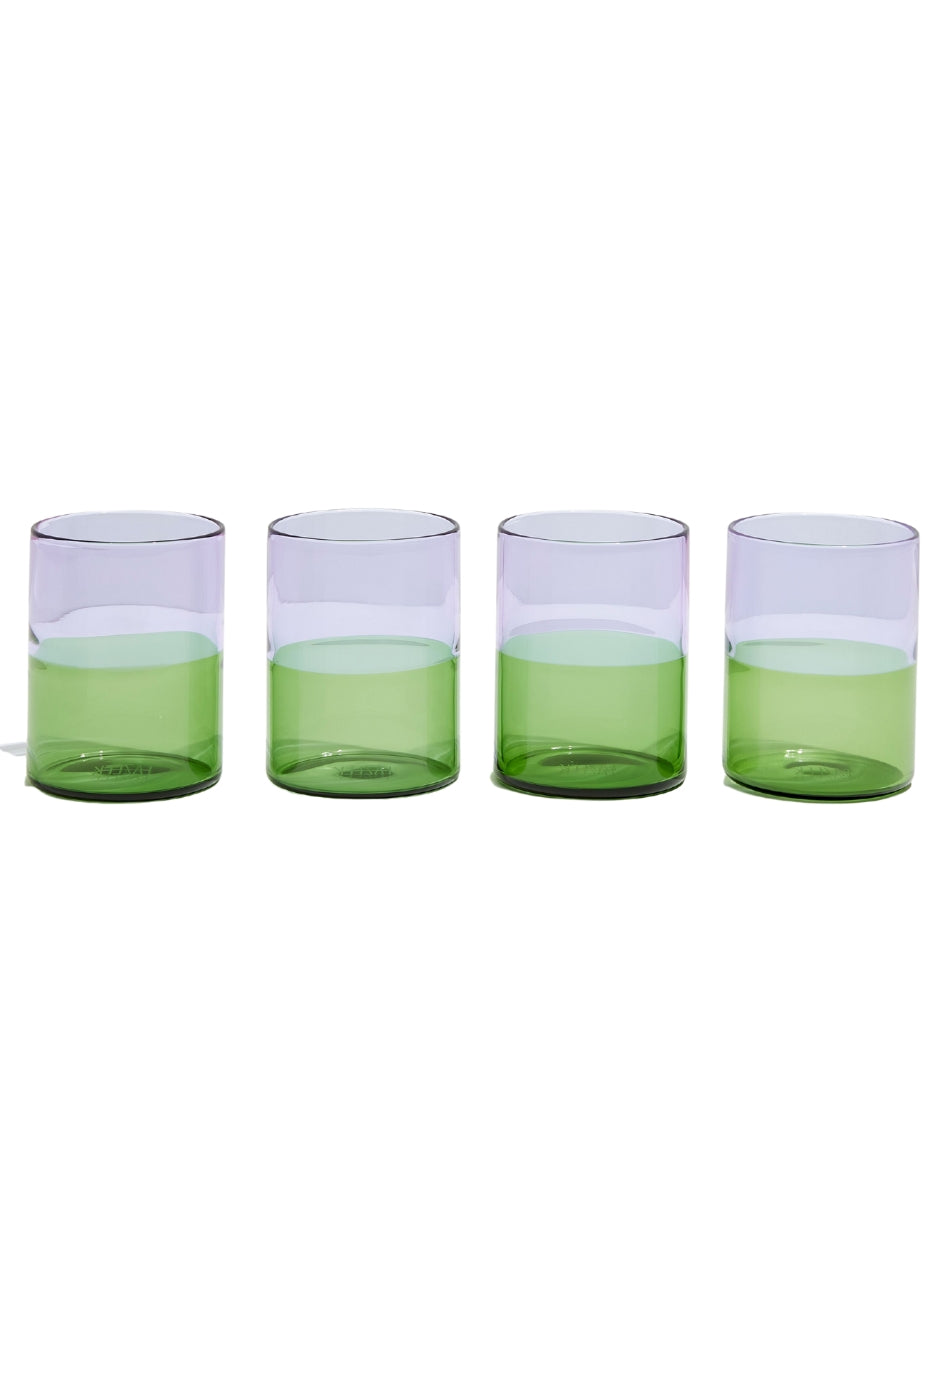 Two Tone Glasses - Set of 4 - Lilac + Green-FAZEEK-P&K The General Store